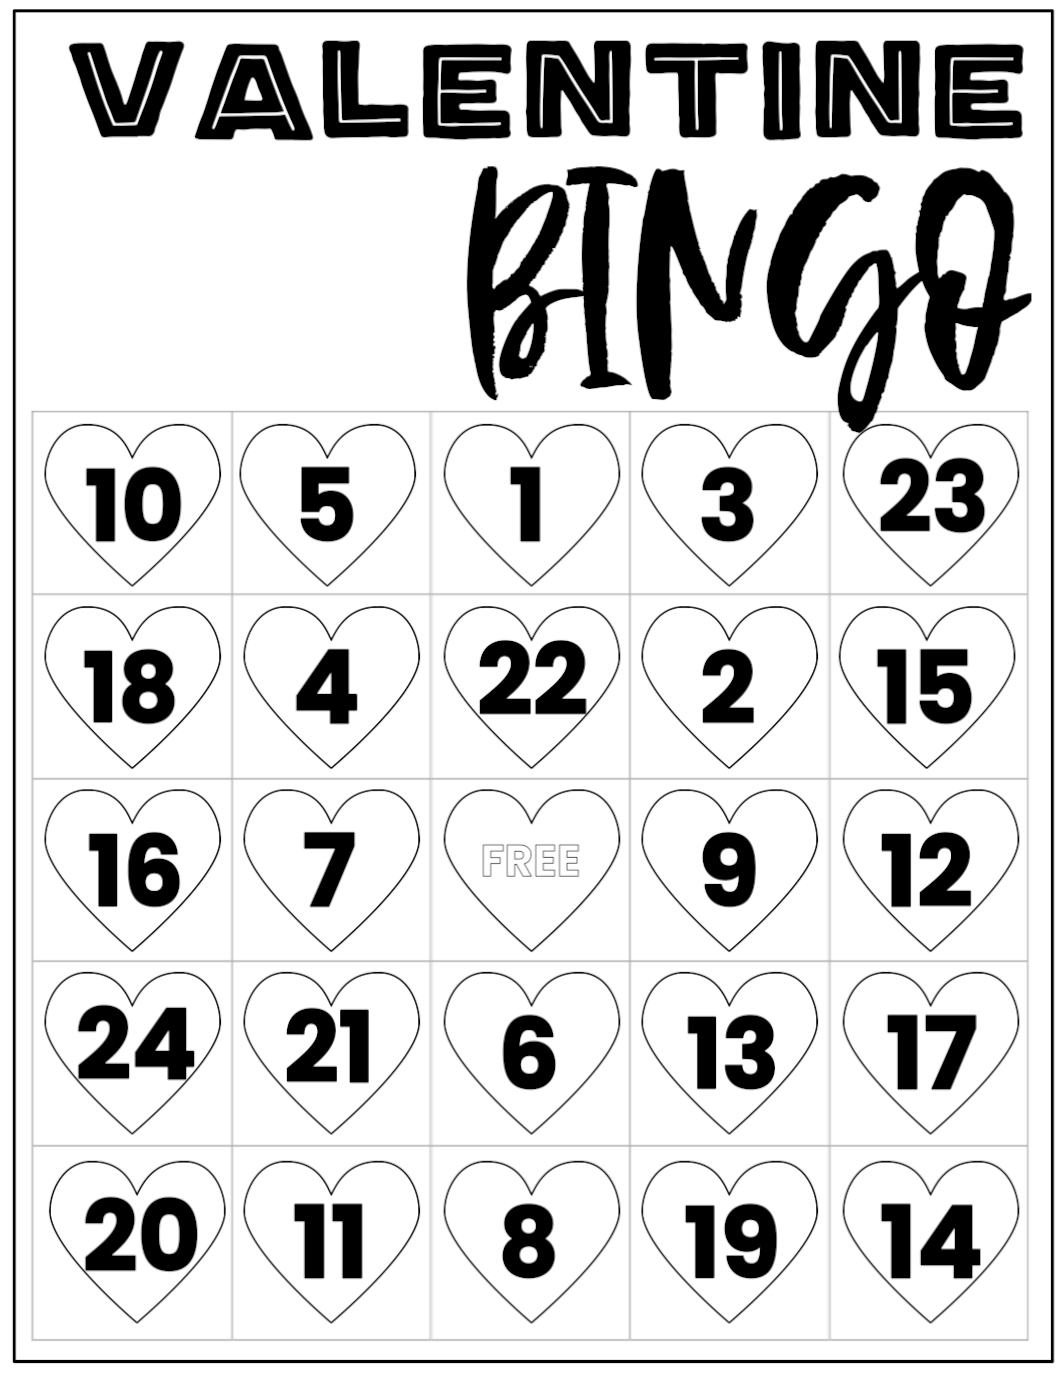 heart bingo promotion code